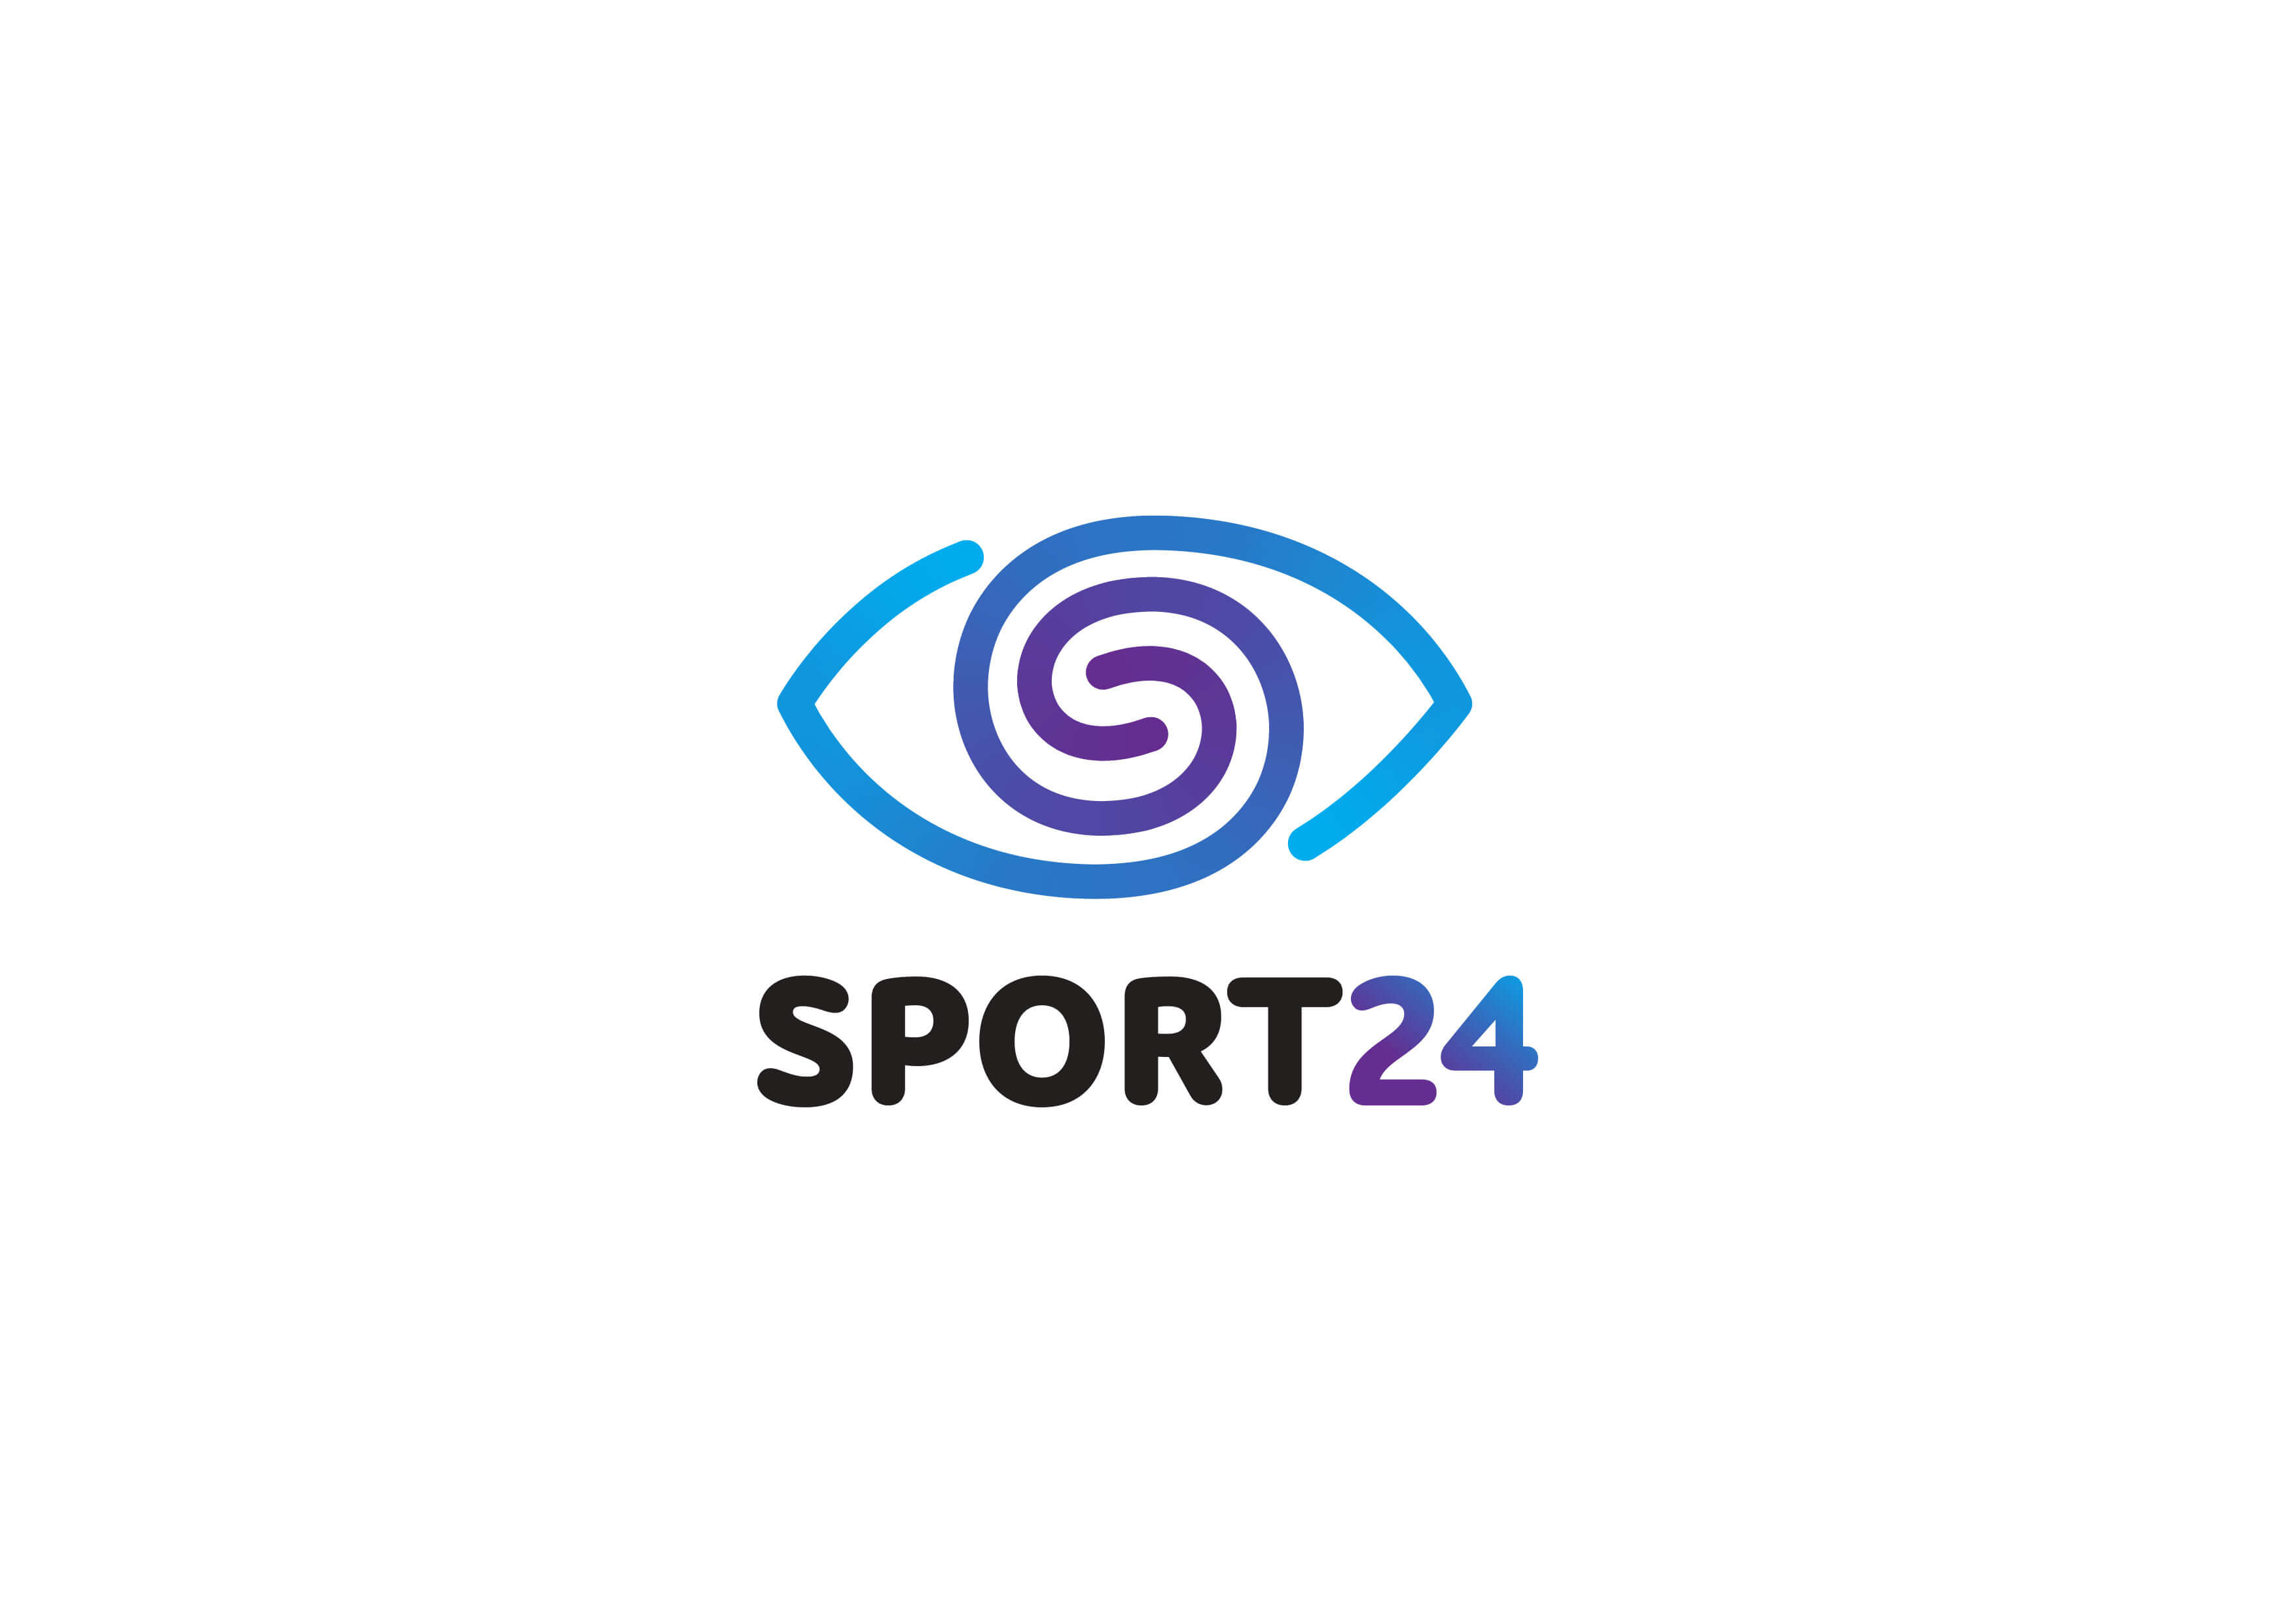 sport24 identity process 15